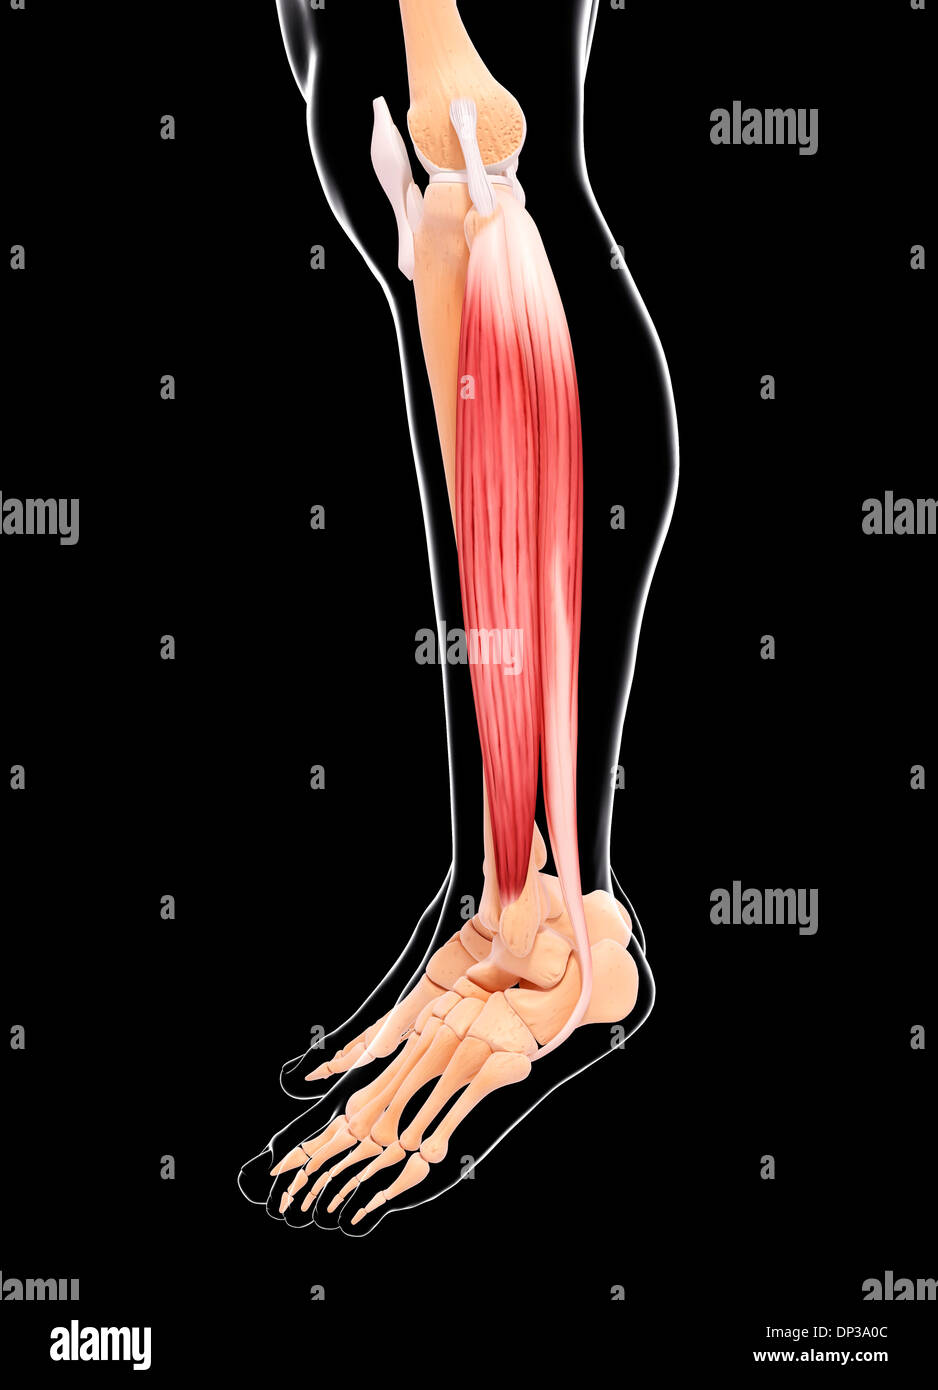 Human leg musculature, artwork Stock Photo